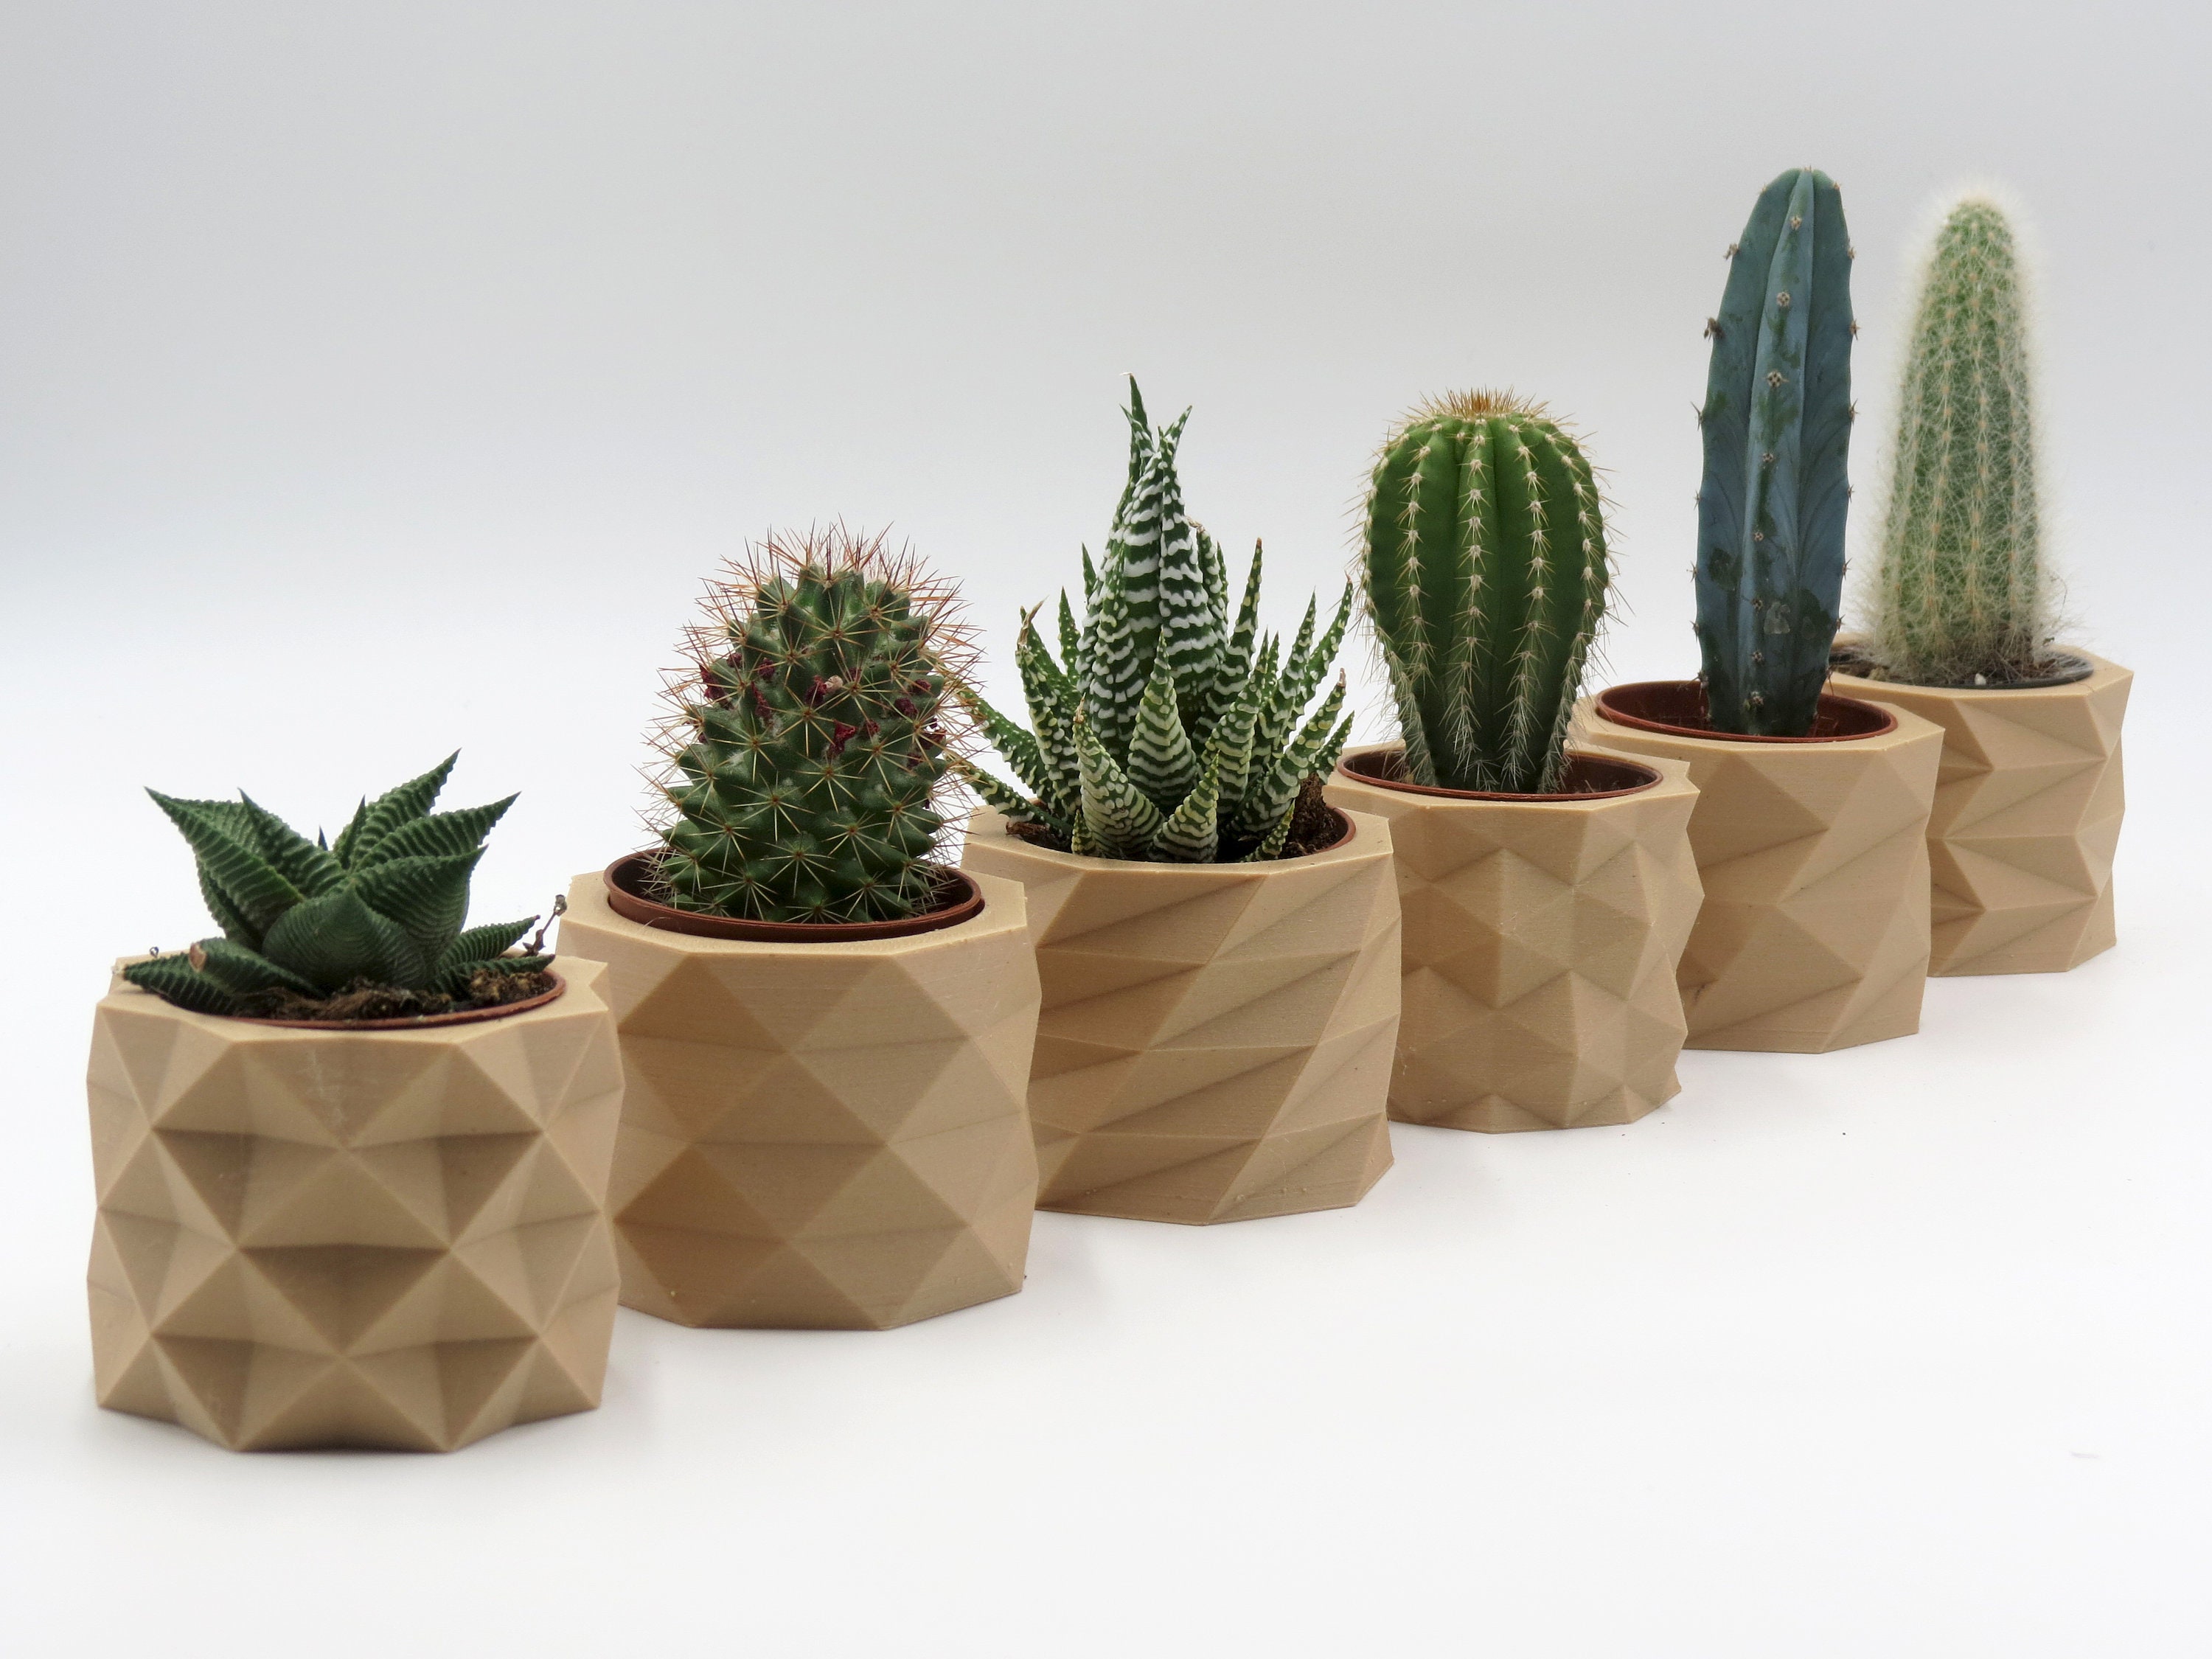 3D Printed Wooden Flower Pots, Planters 